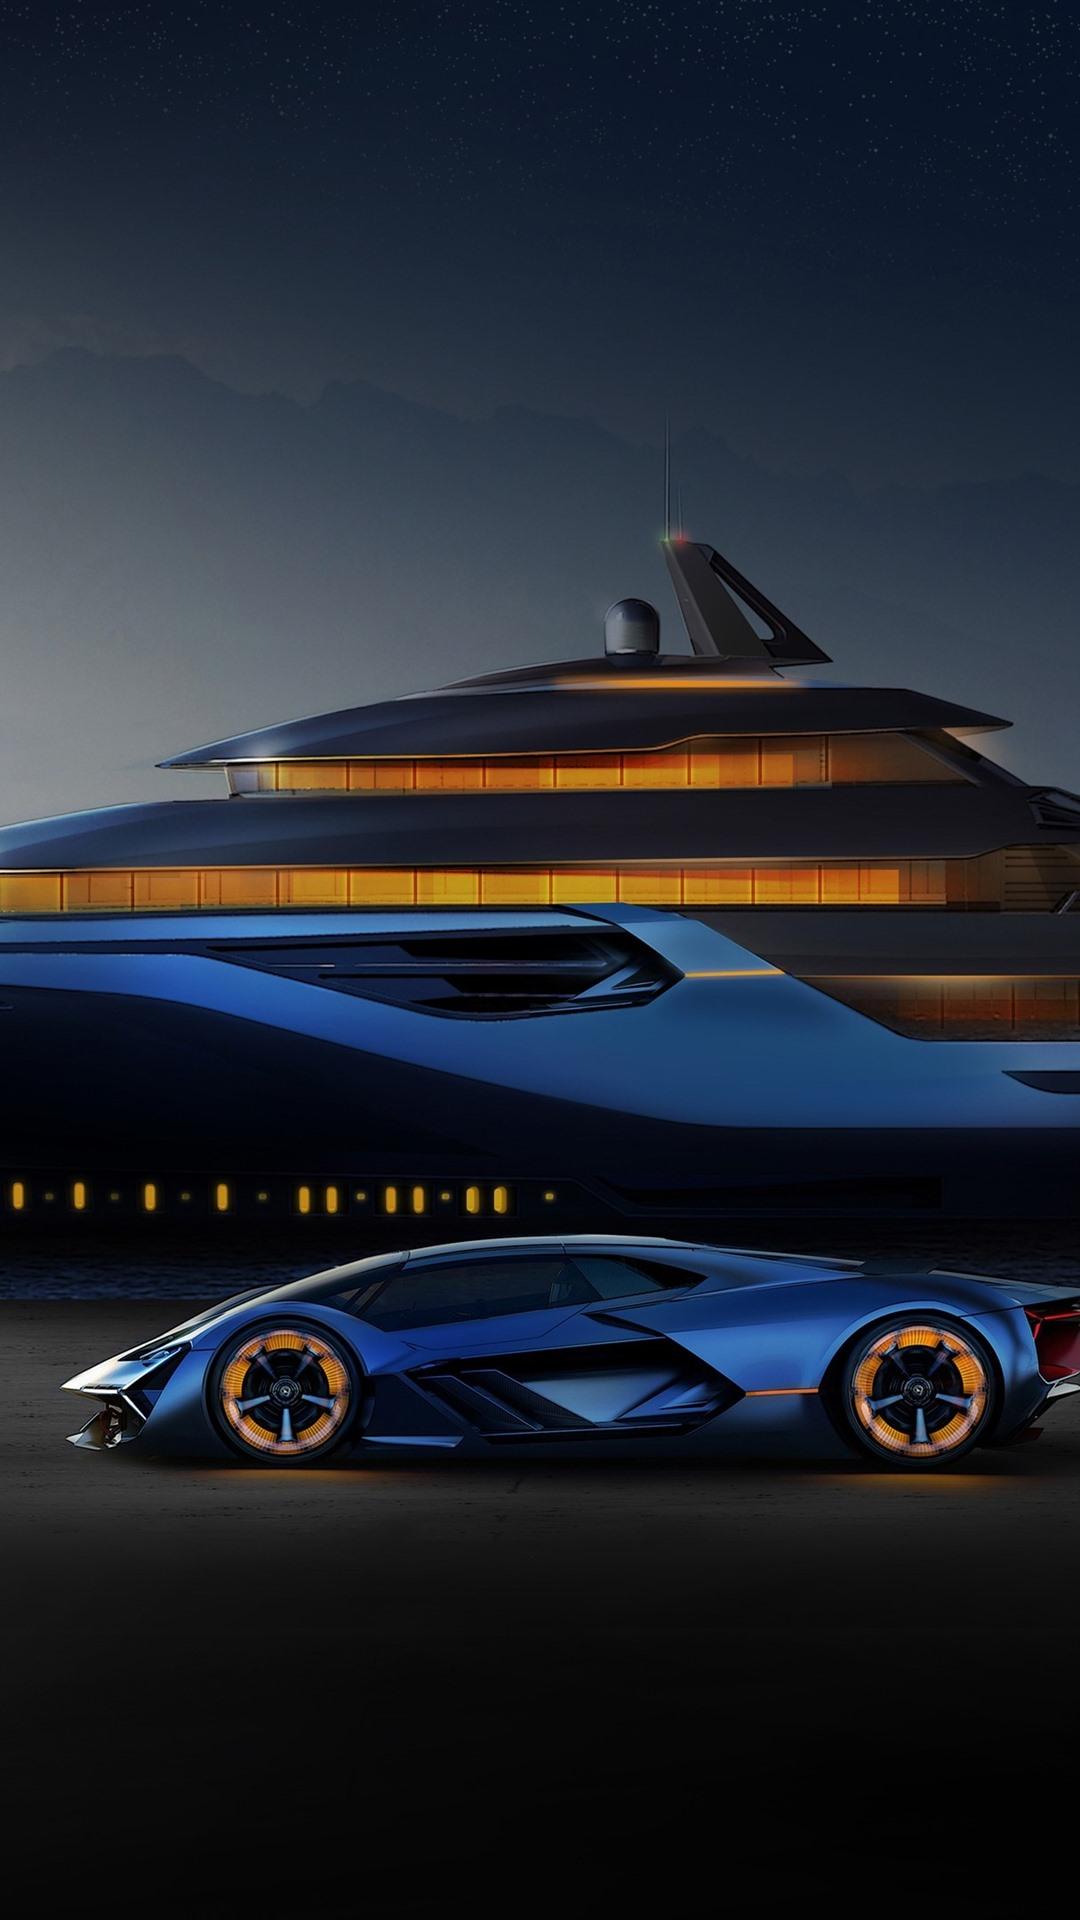 Blue Lamborghini, Yacht, Helicopter 1080x1920 IPhone 8 7 6